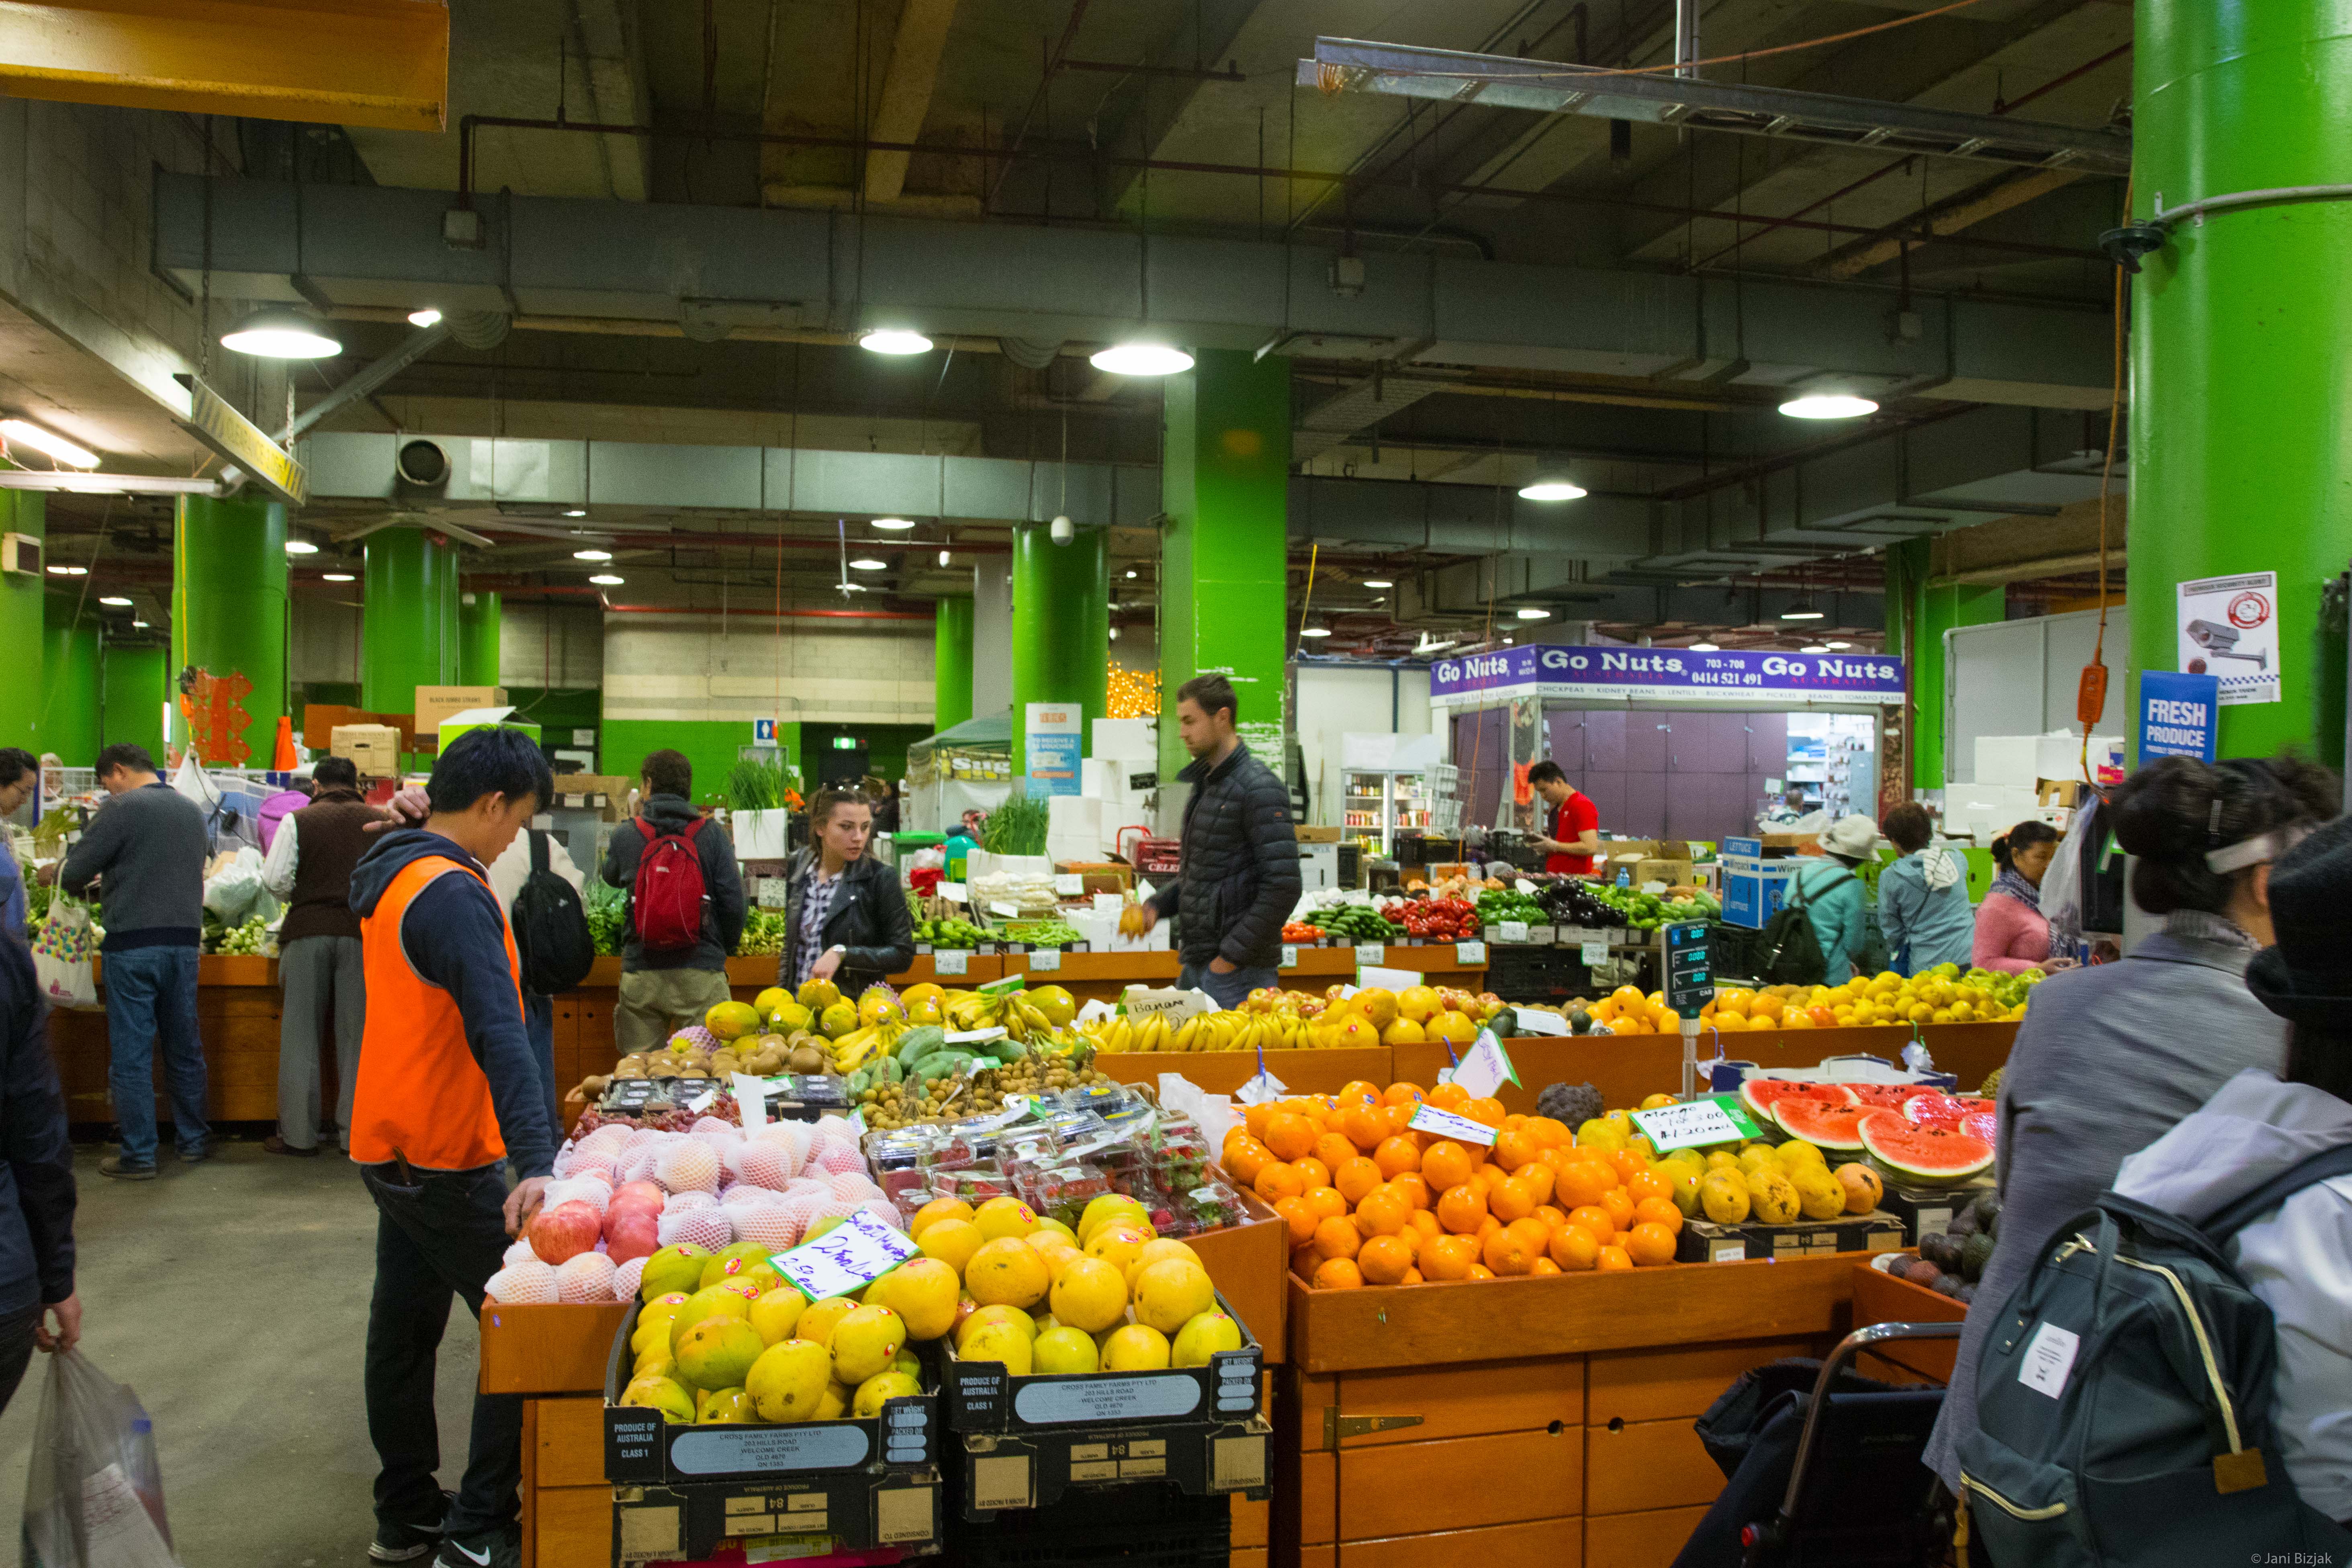 Sydney's market